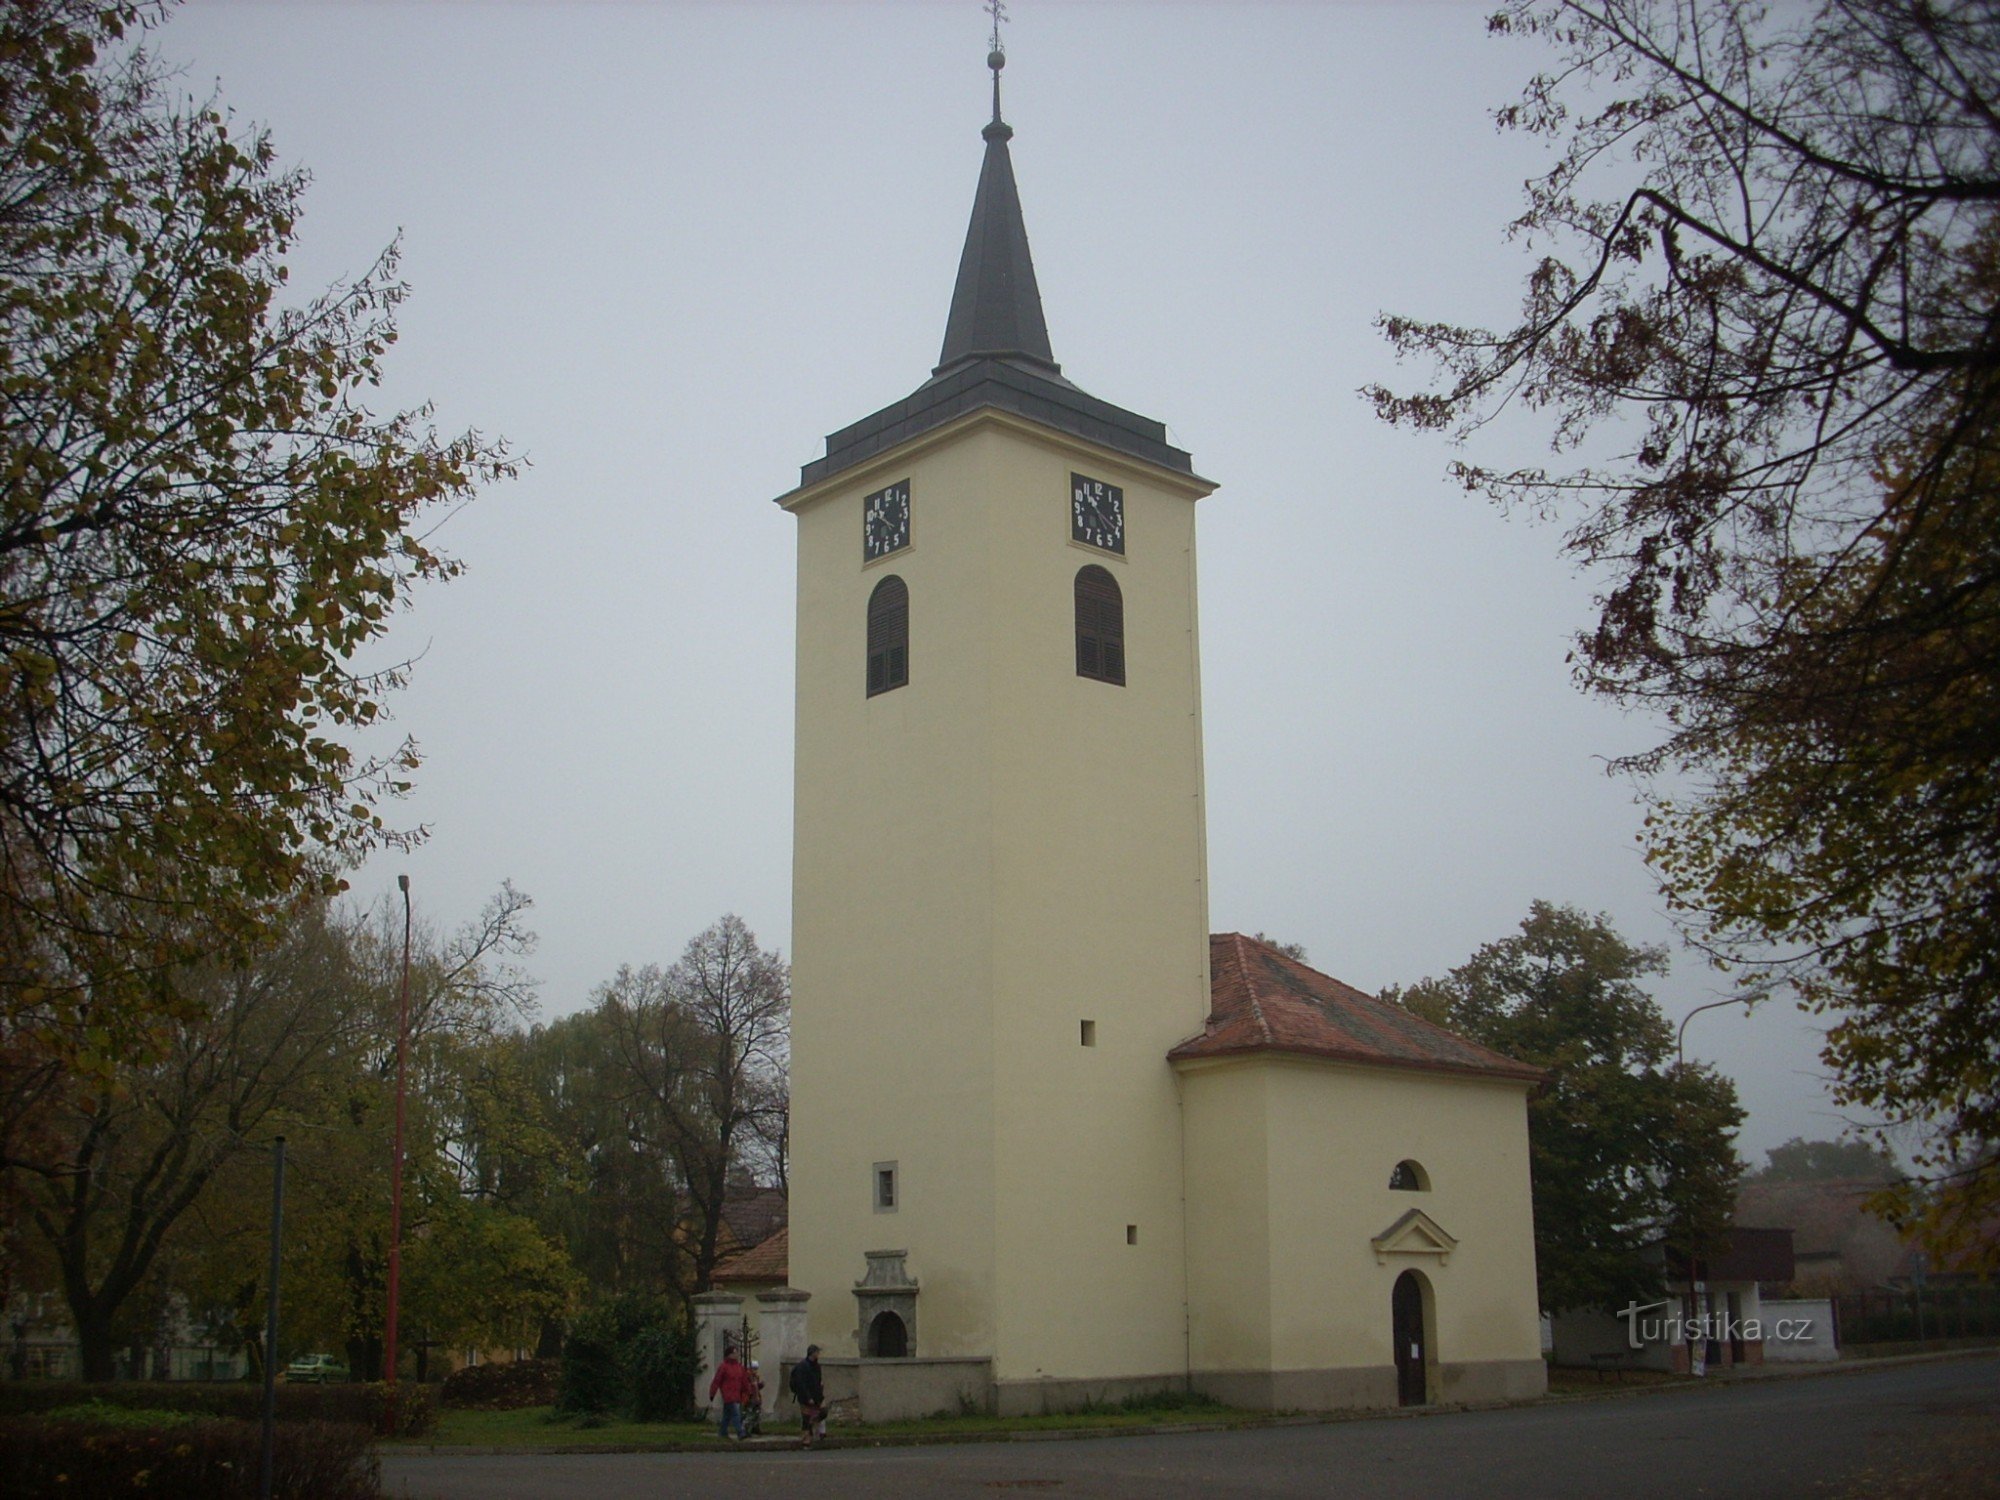 Eglise de Saint Jan Nepomuk